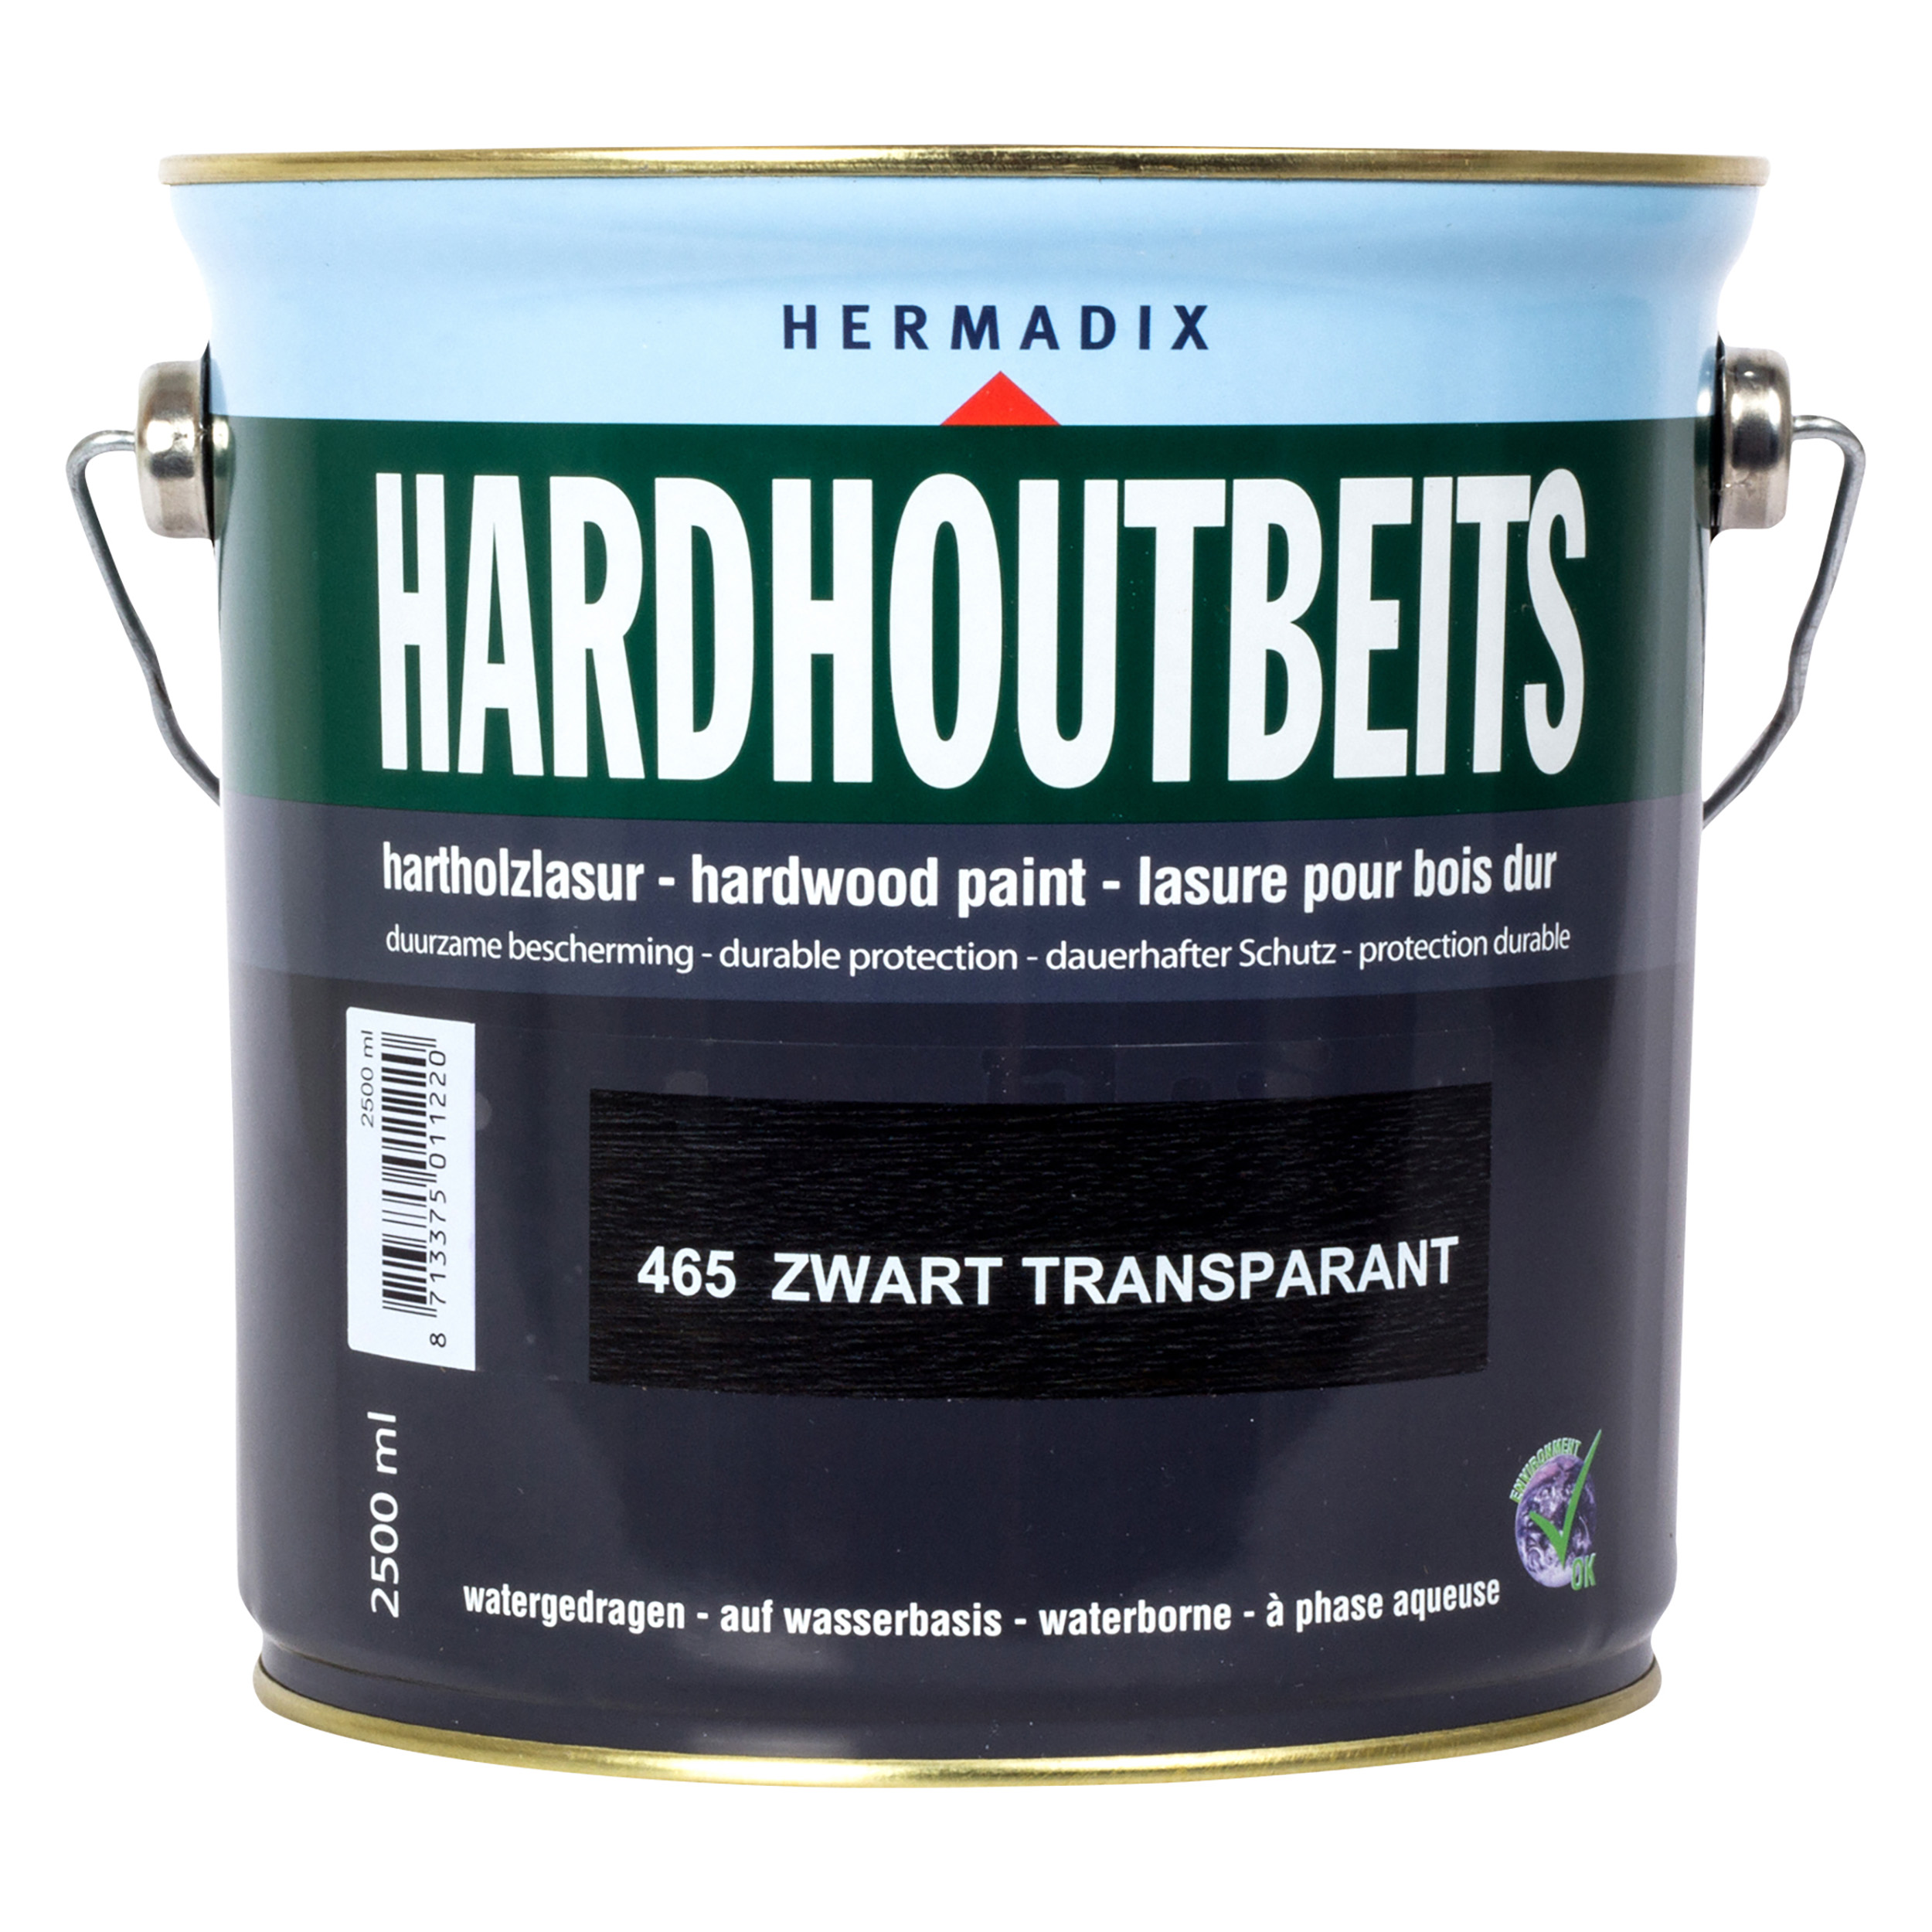 25.846.52 Hermadix  hardhoutbeits zijdeglans - 2500 ml - zwart transparant (465)